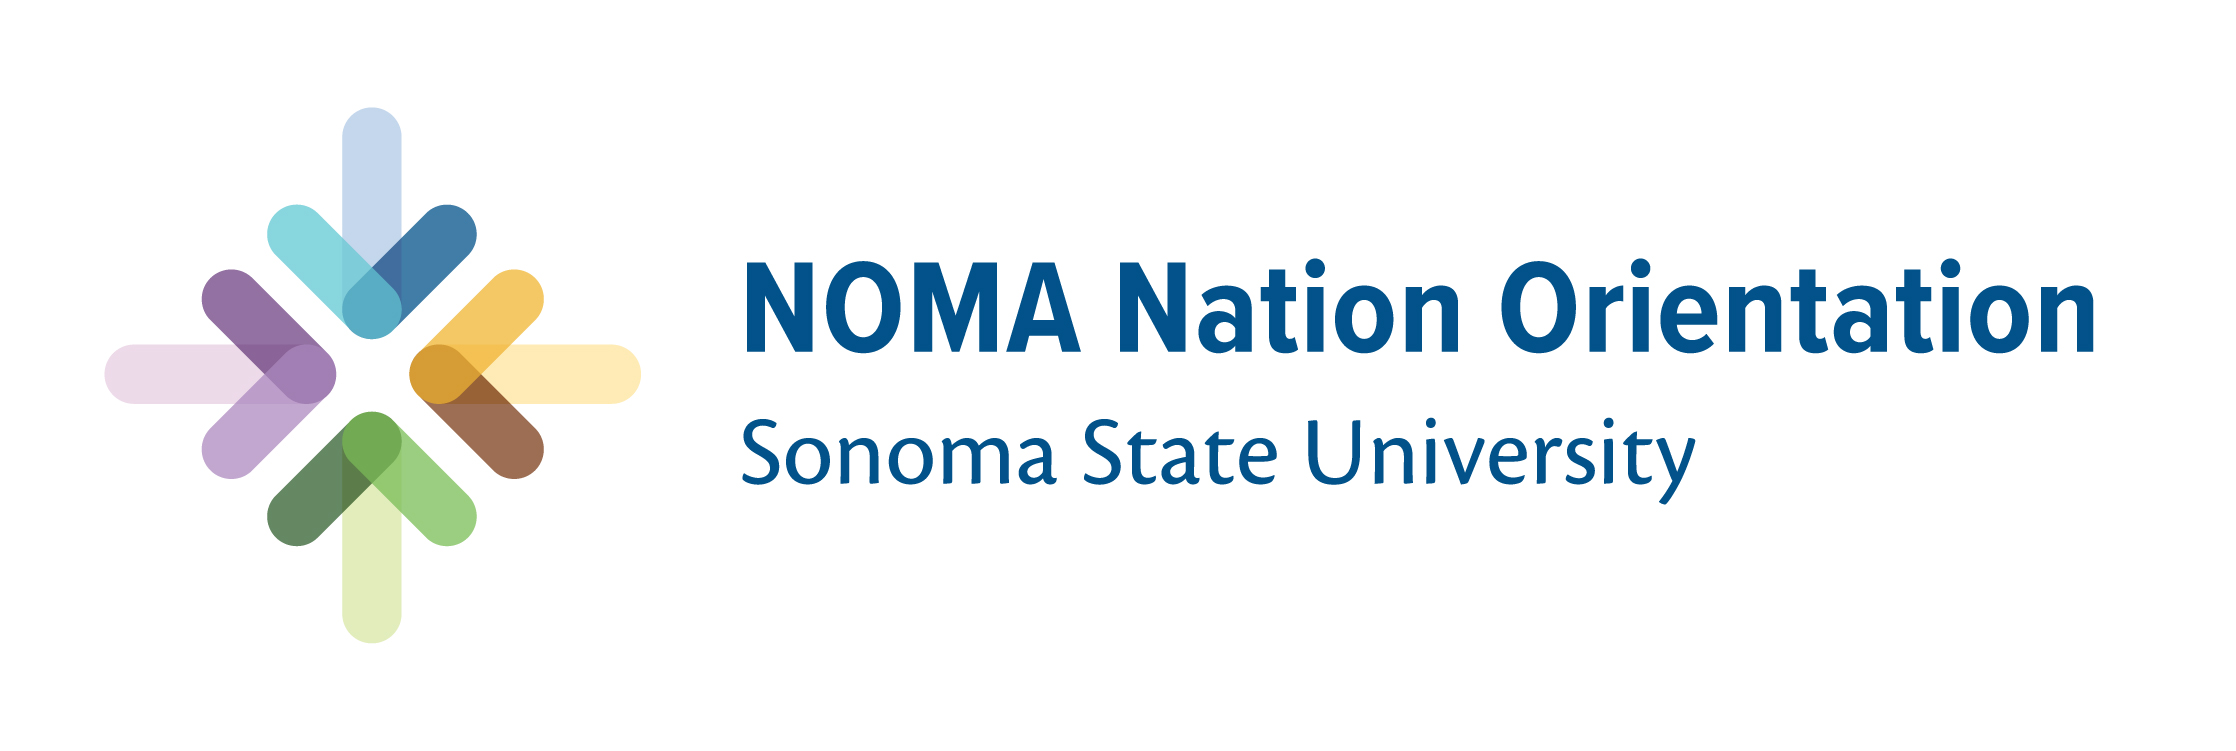 Noma Nation orientation logo